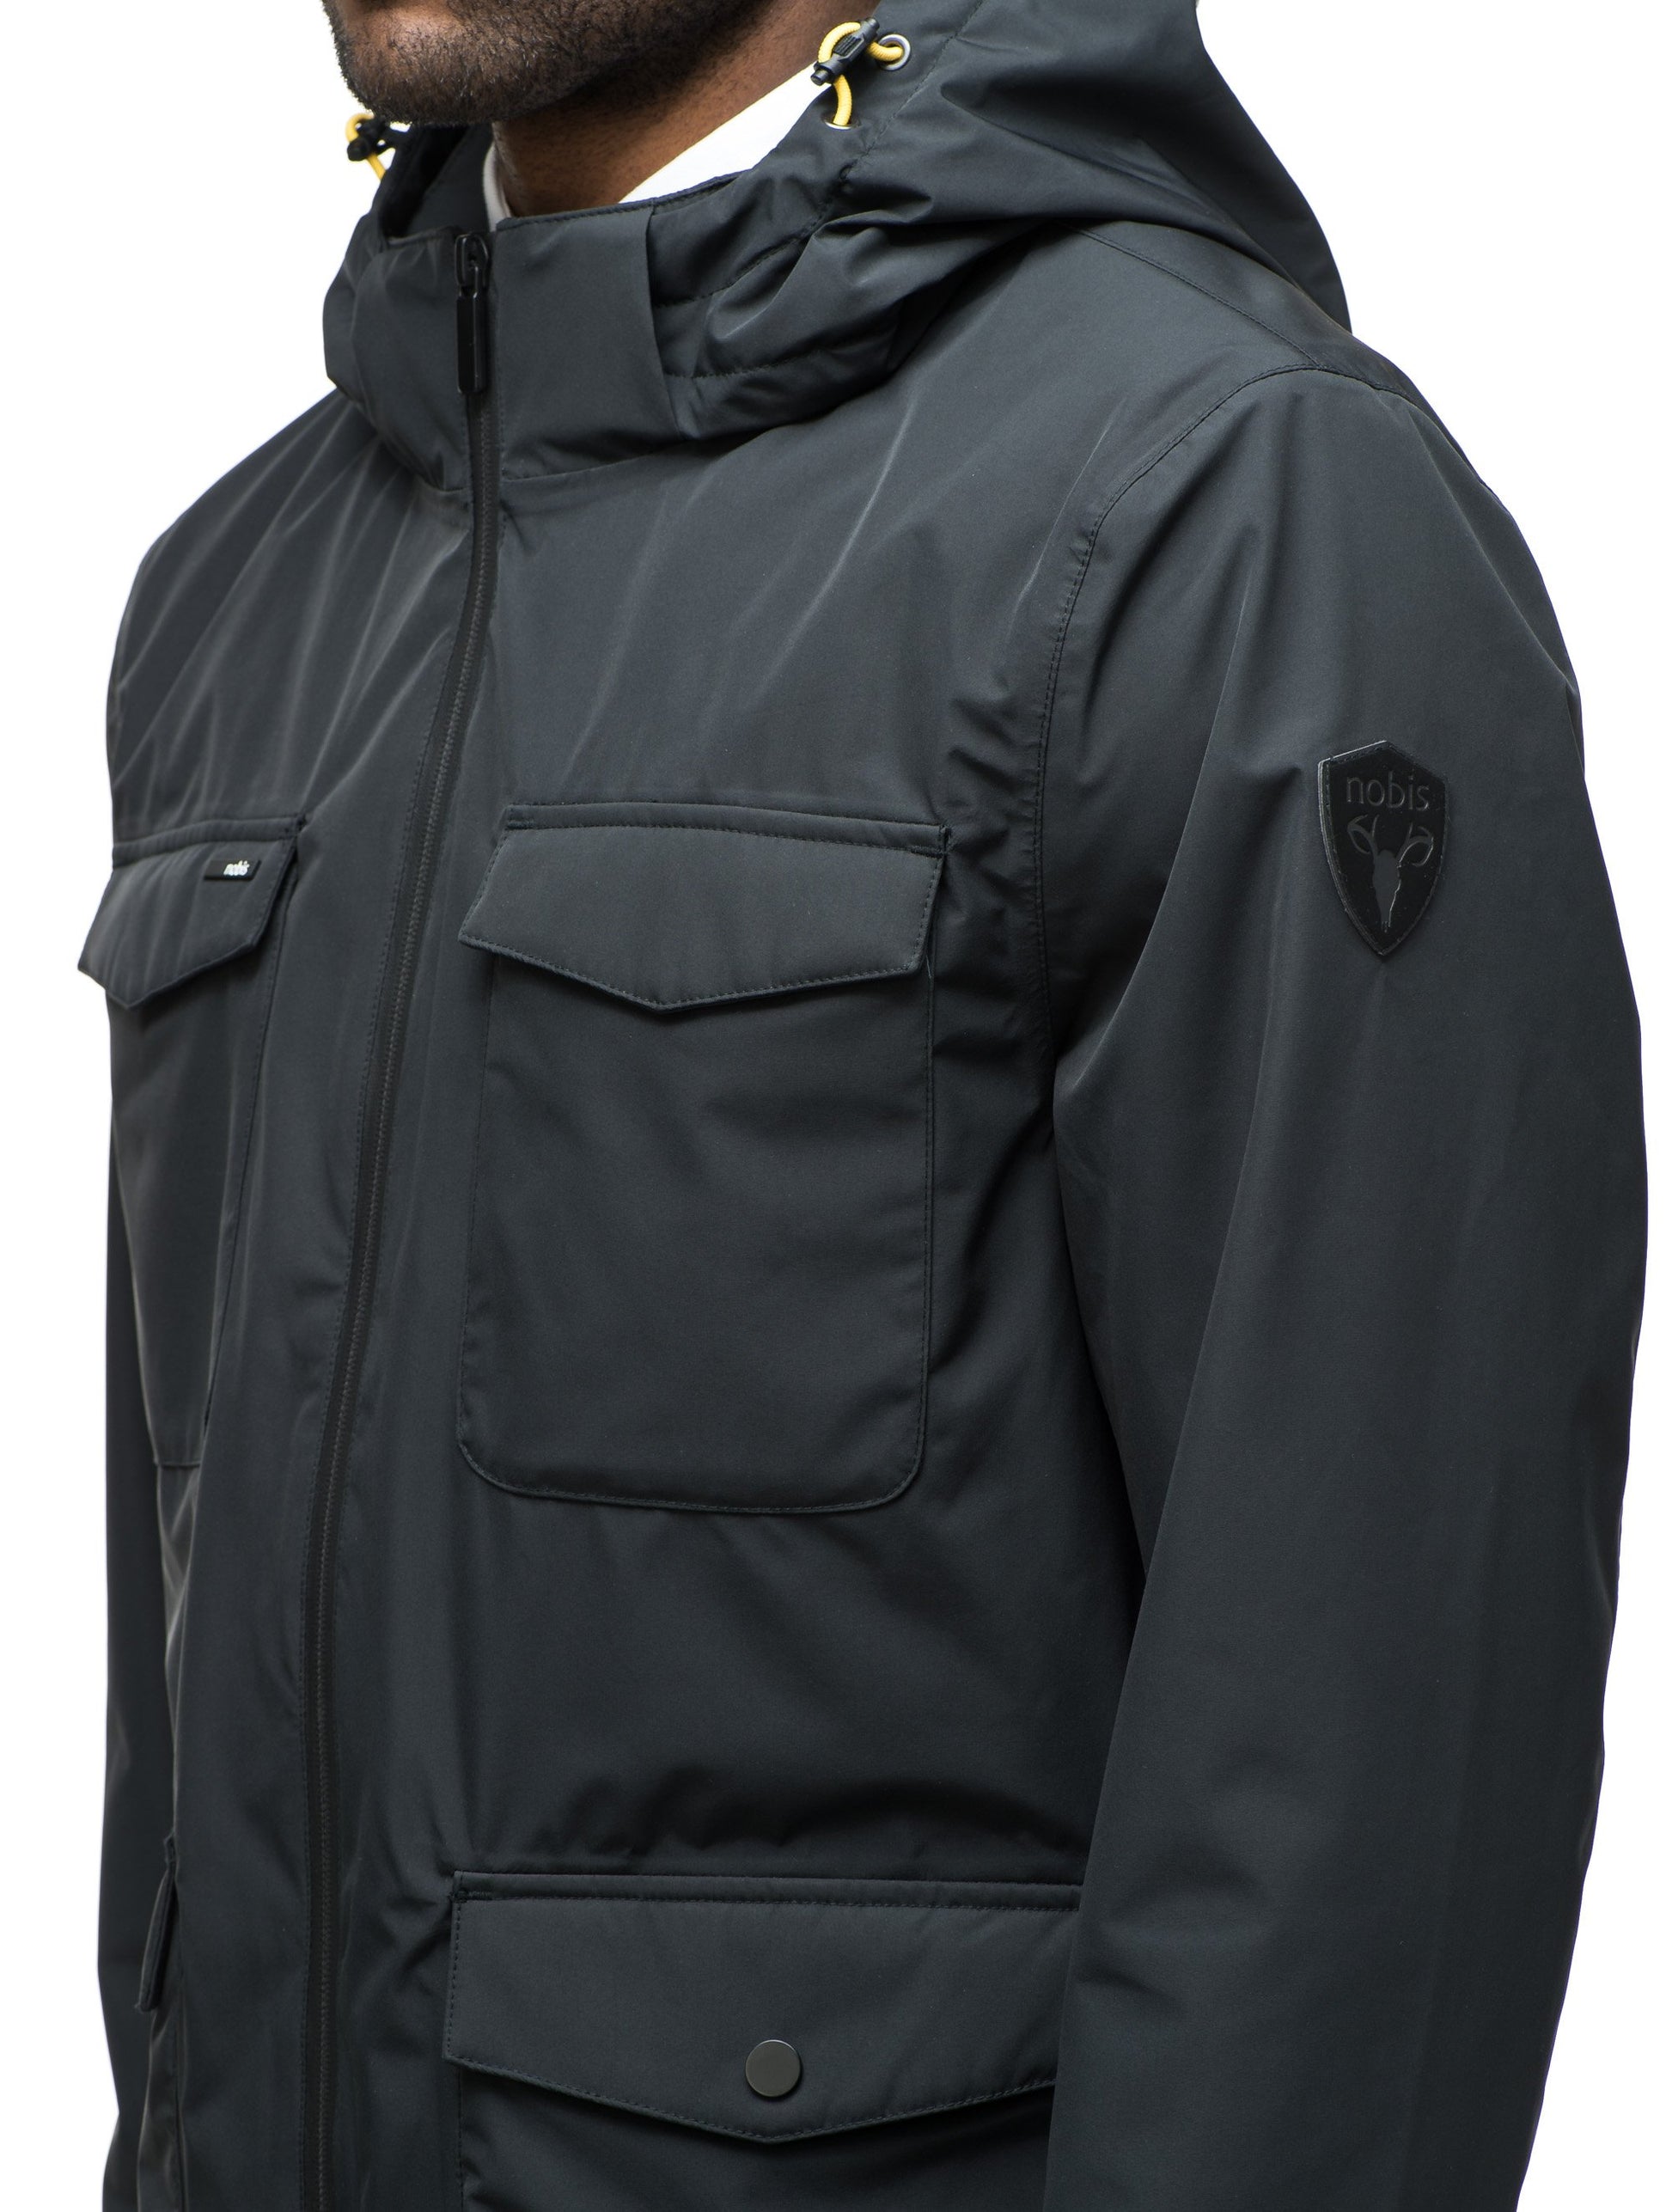 Men's waist length jacket in Black